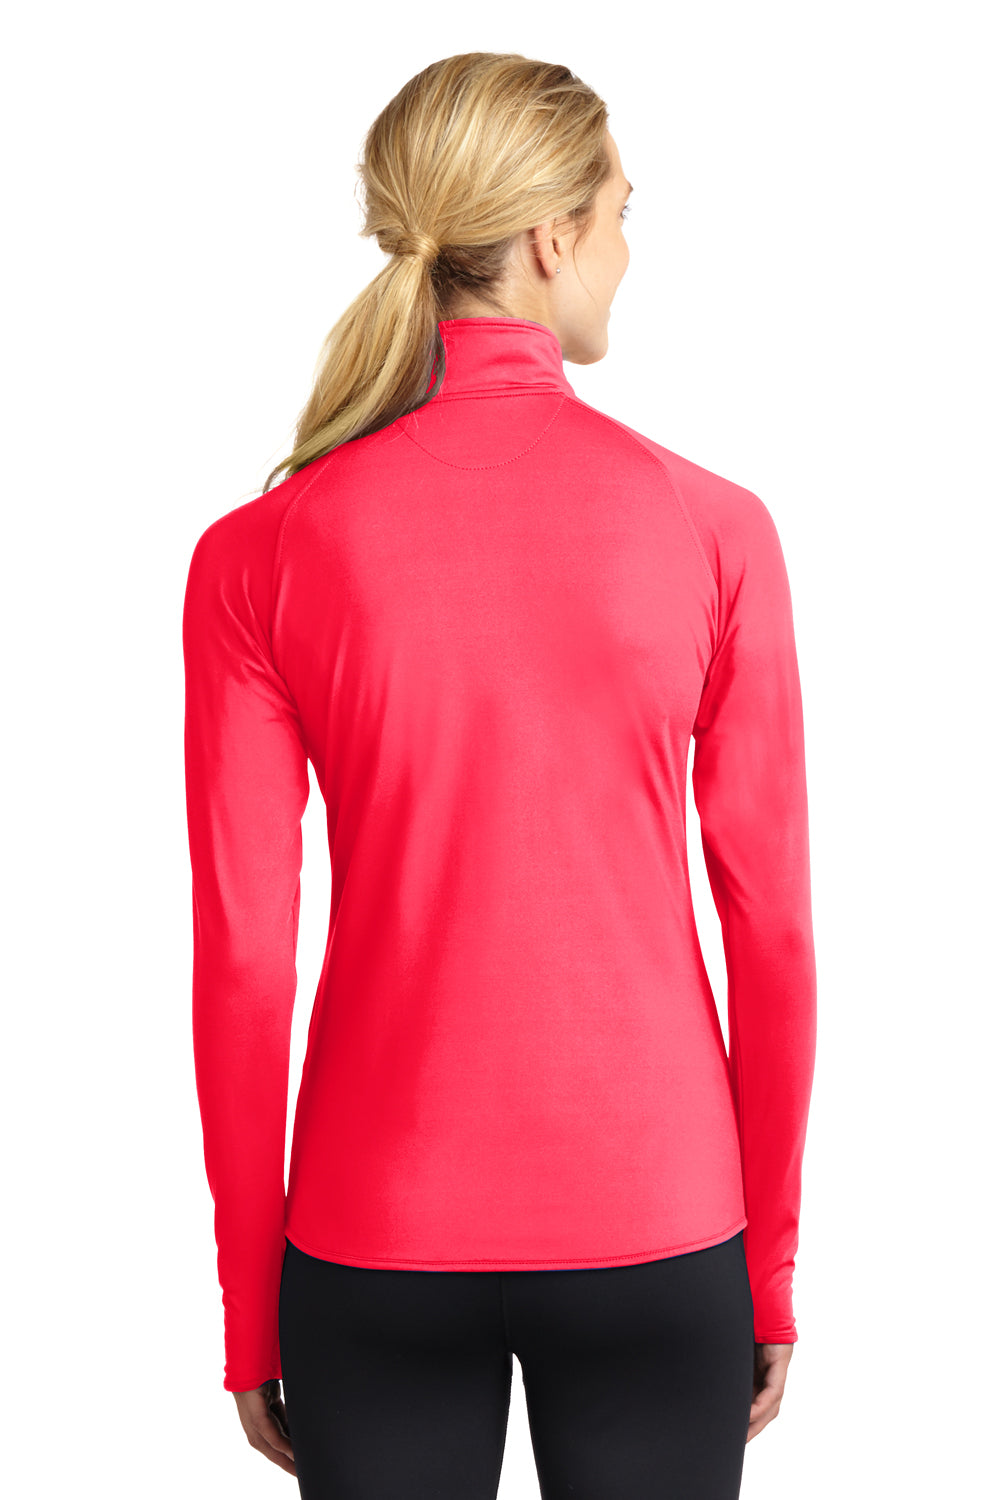 Sport-Tek LST850 Womens Sport-Wick Moisture Wicking 1/4 Zip Sweatshirt Hot Coral Pink Back